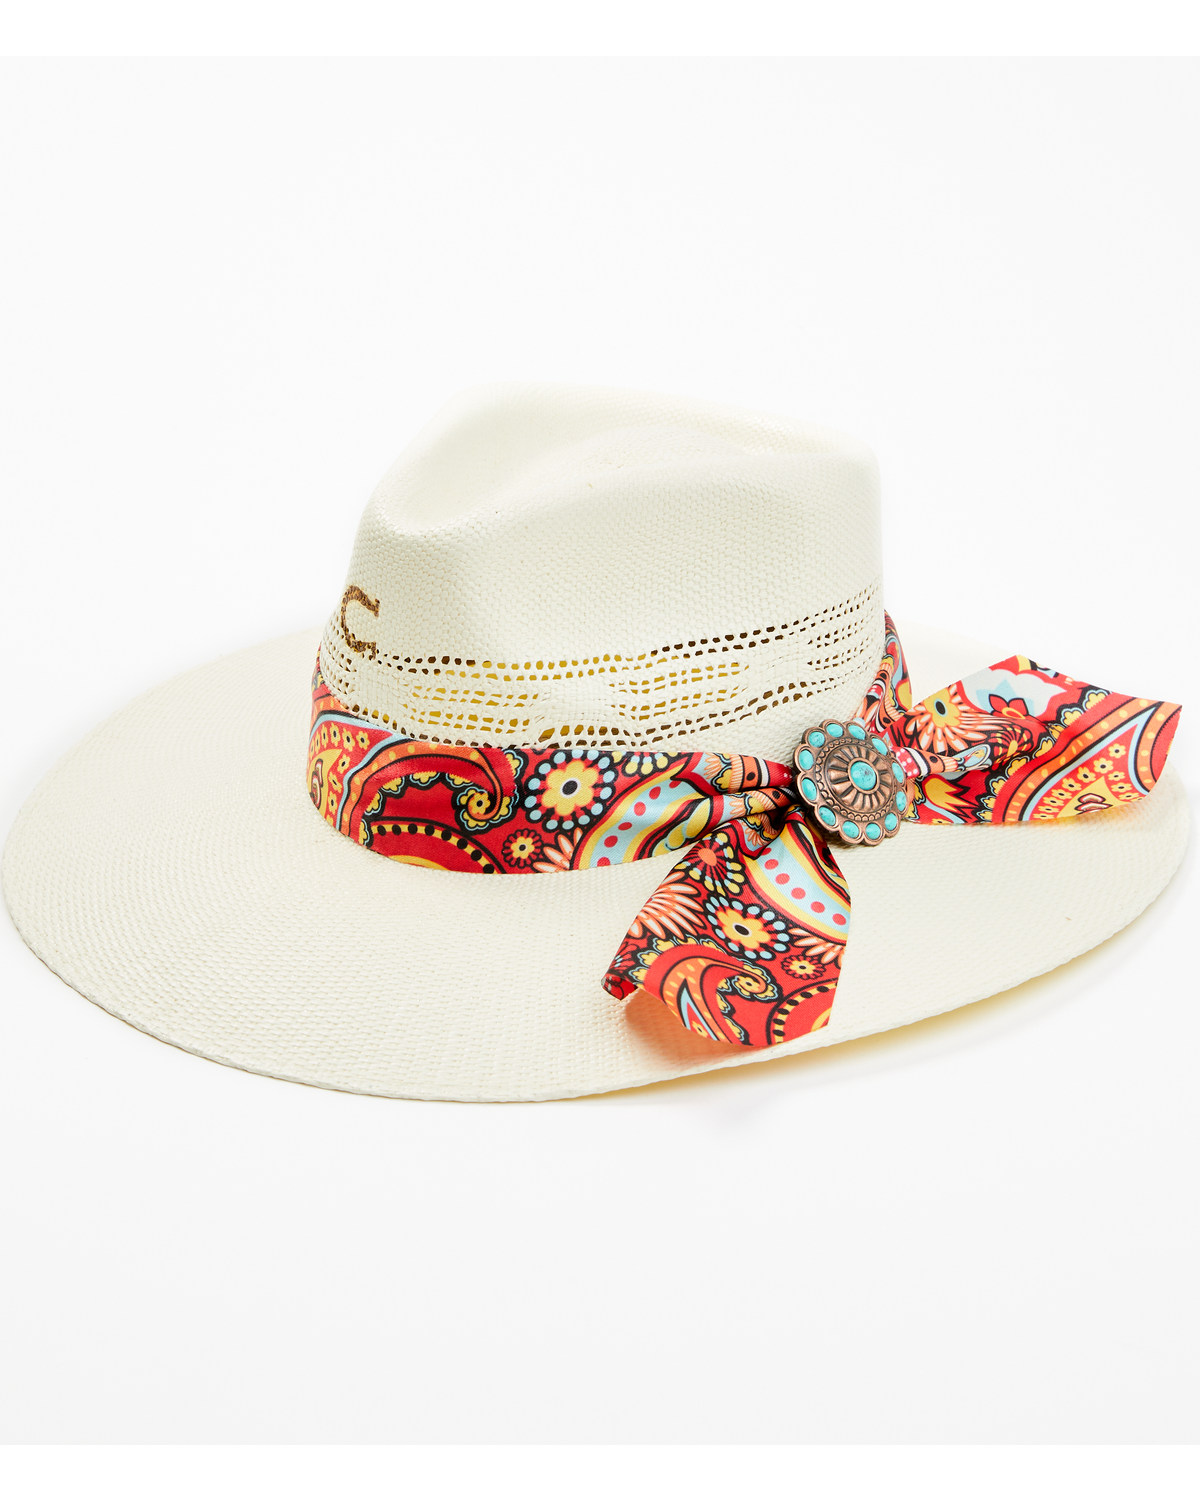 Charlie 1 Horse Women's Chisos Straw Western Fashion Hat